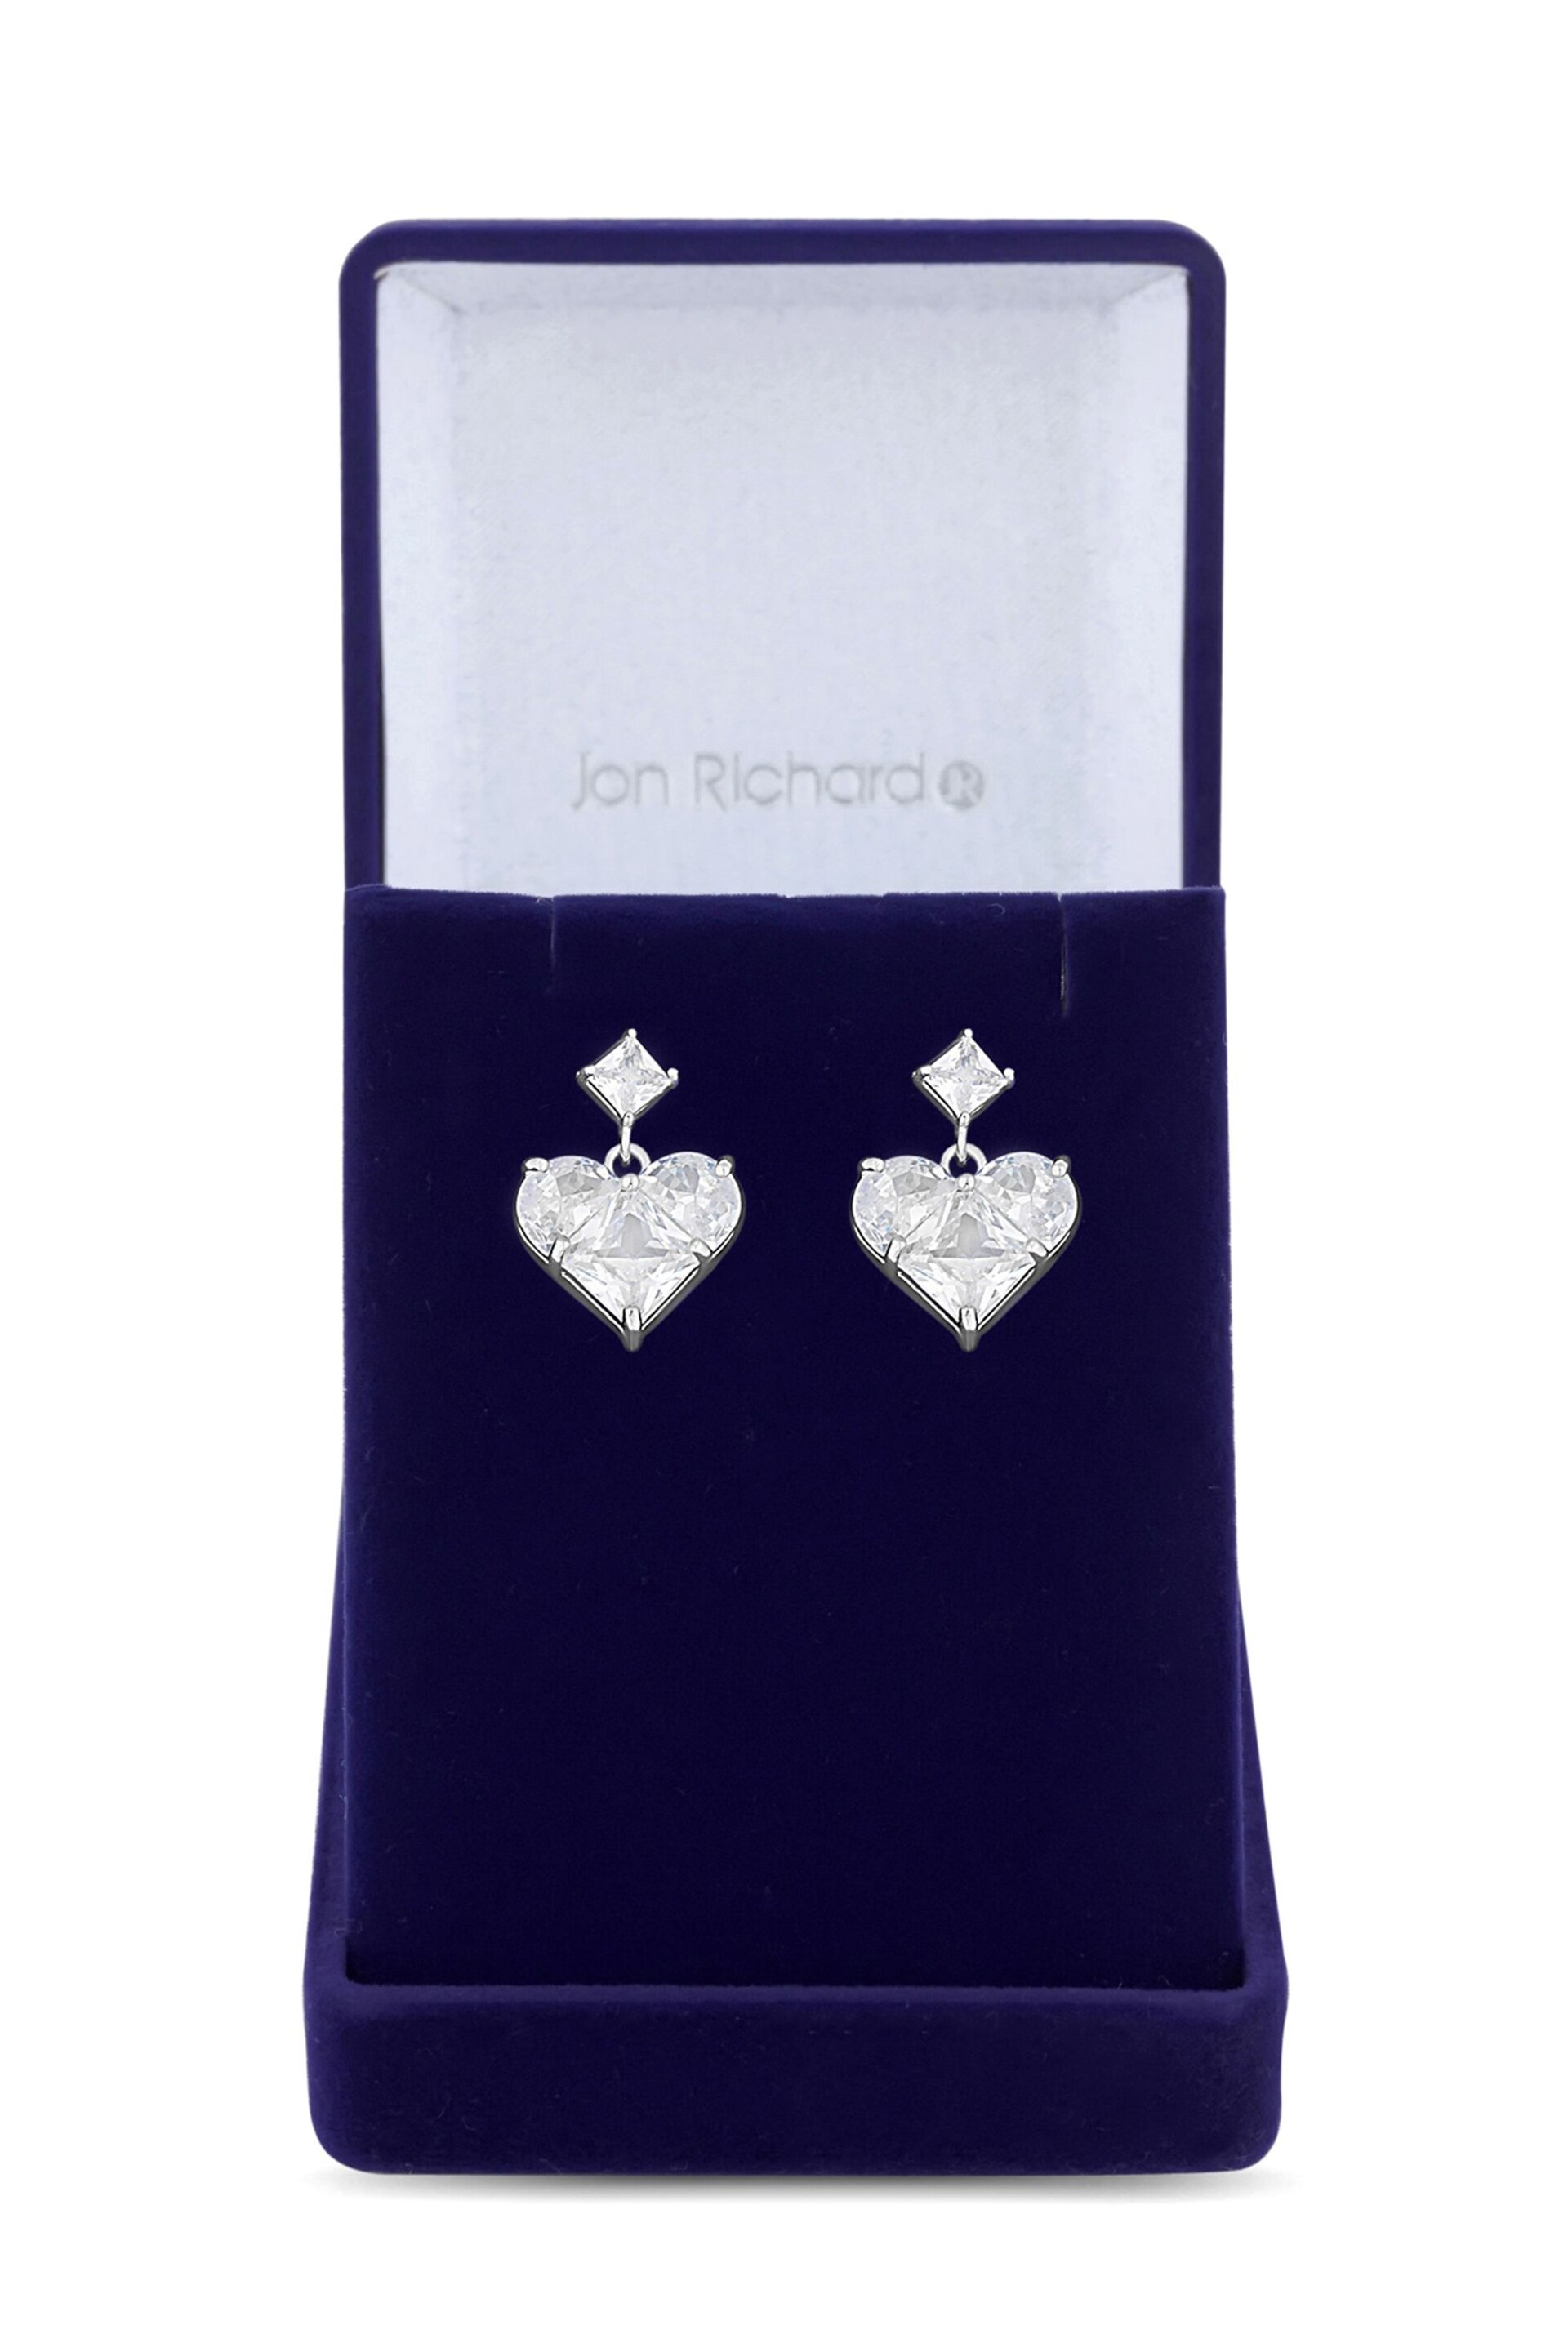 Jon Richard Silver Tone Cubic Zirconia Mixed Stone Heart Earrings - Image 3 of 3